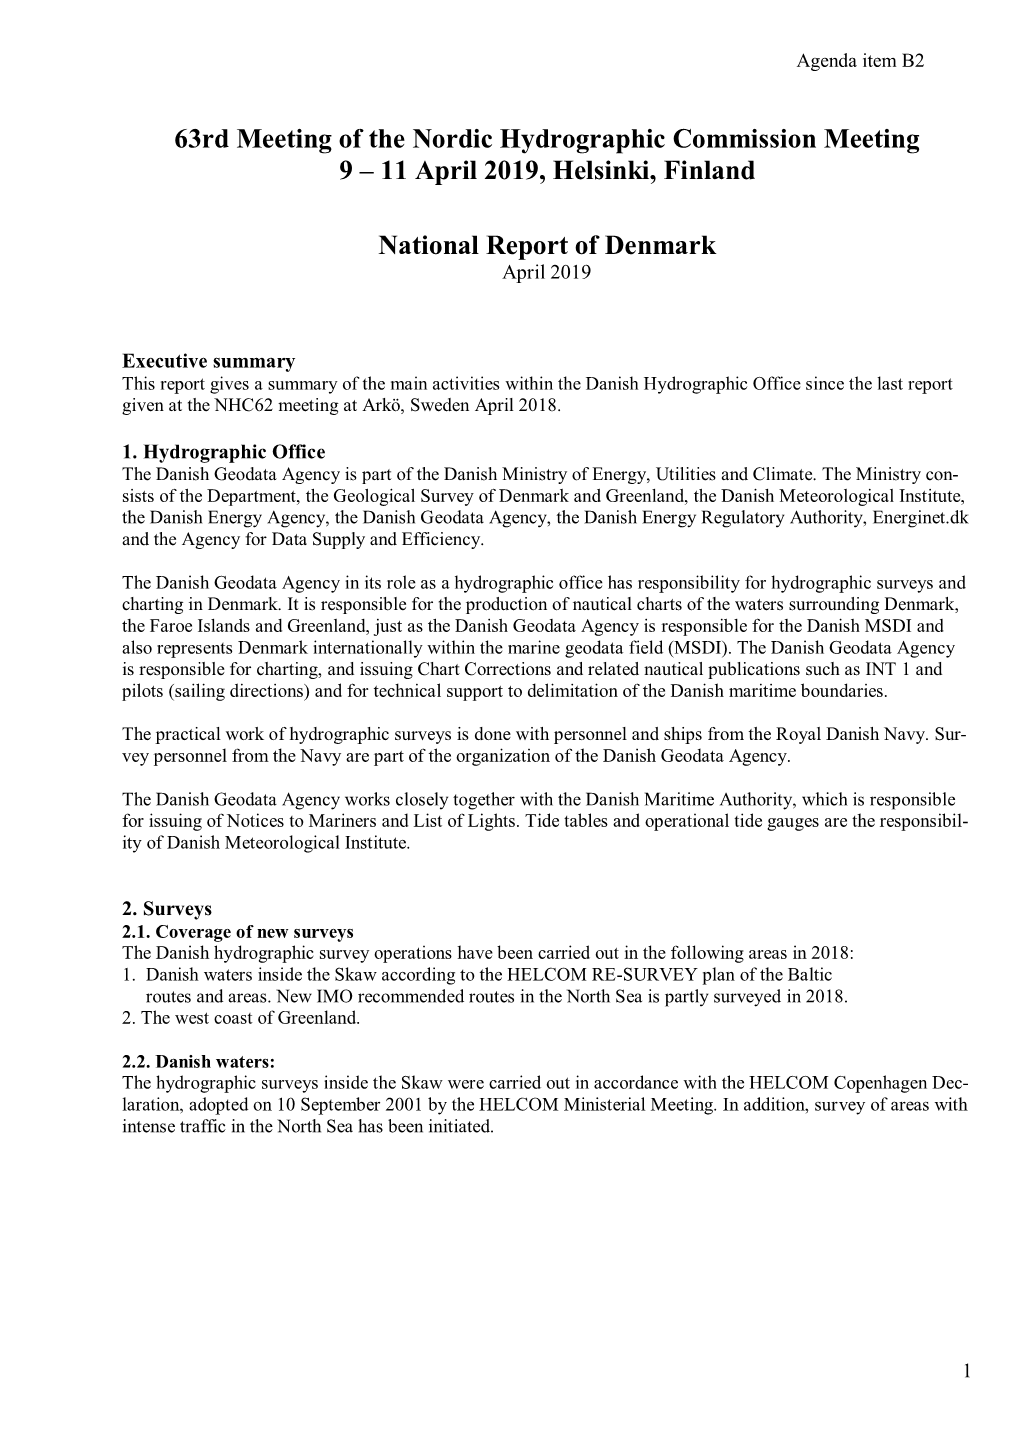 National Report of Denmark April 2019